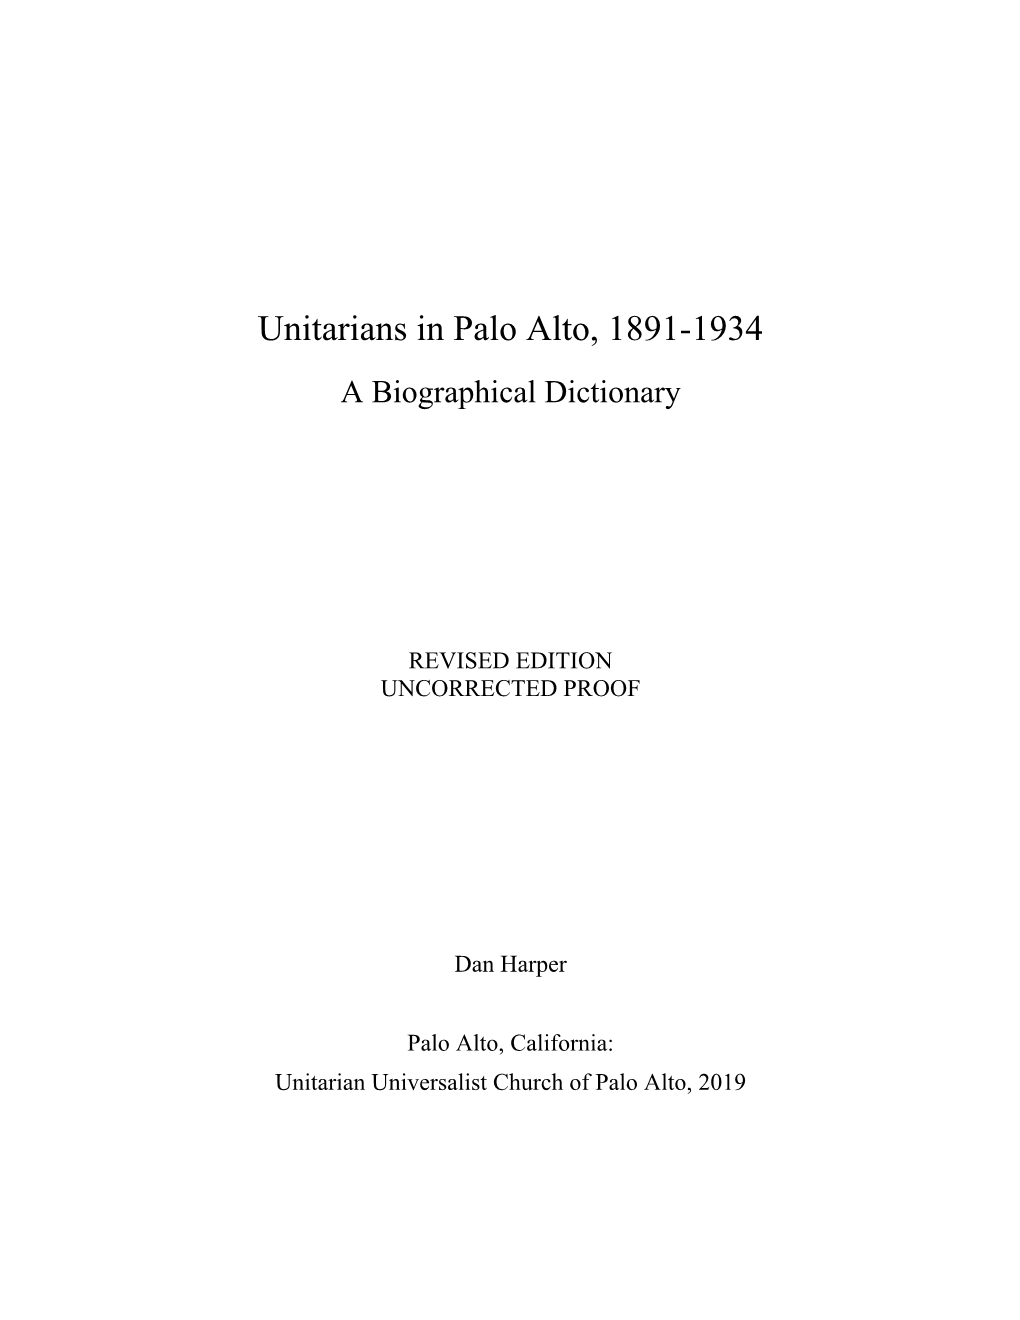 Unitarians in Palo Alto, 1891-1934: a Biographical Dictionary Uncorrected Proof Copyright © 2019 Dan Harper